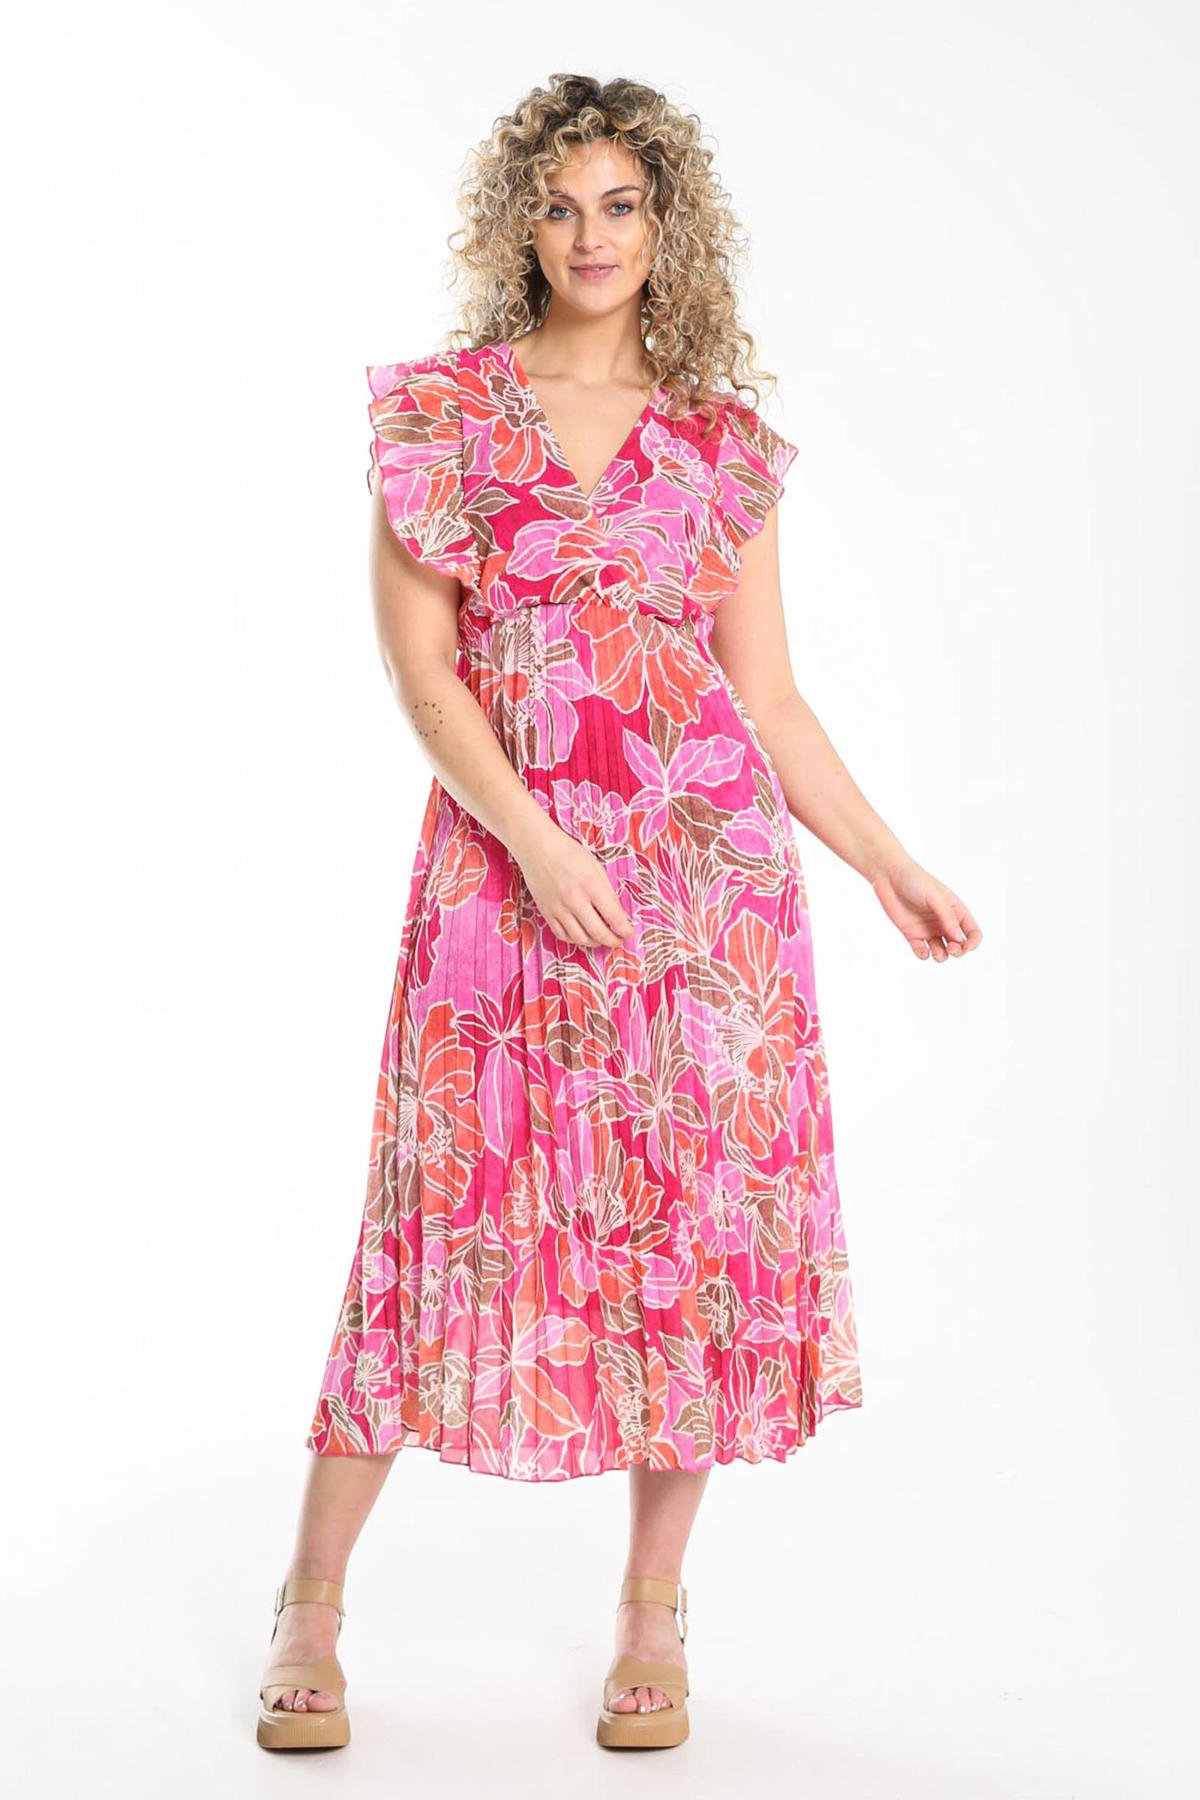 Plons verkoudheid Outlook Cassis gebloemde jurk roze/fuchsia/oranje | wehkamp